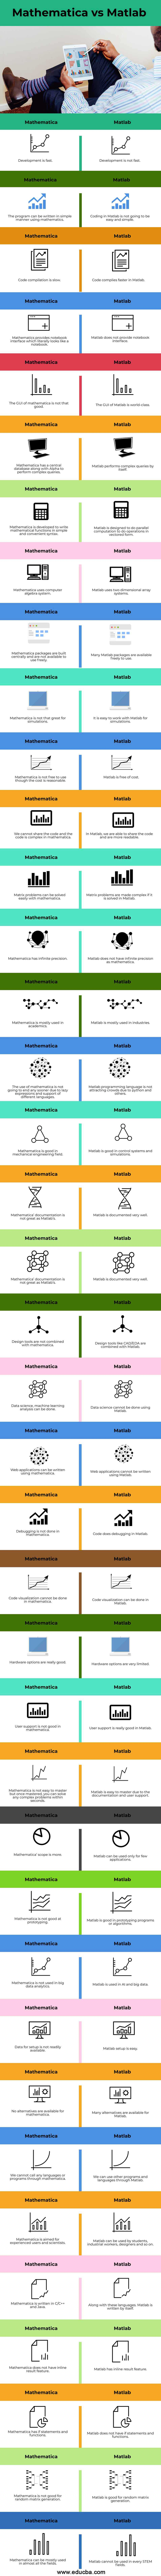 Mathematica vs Matlab info